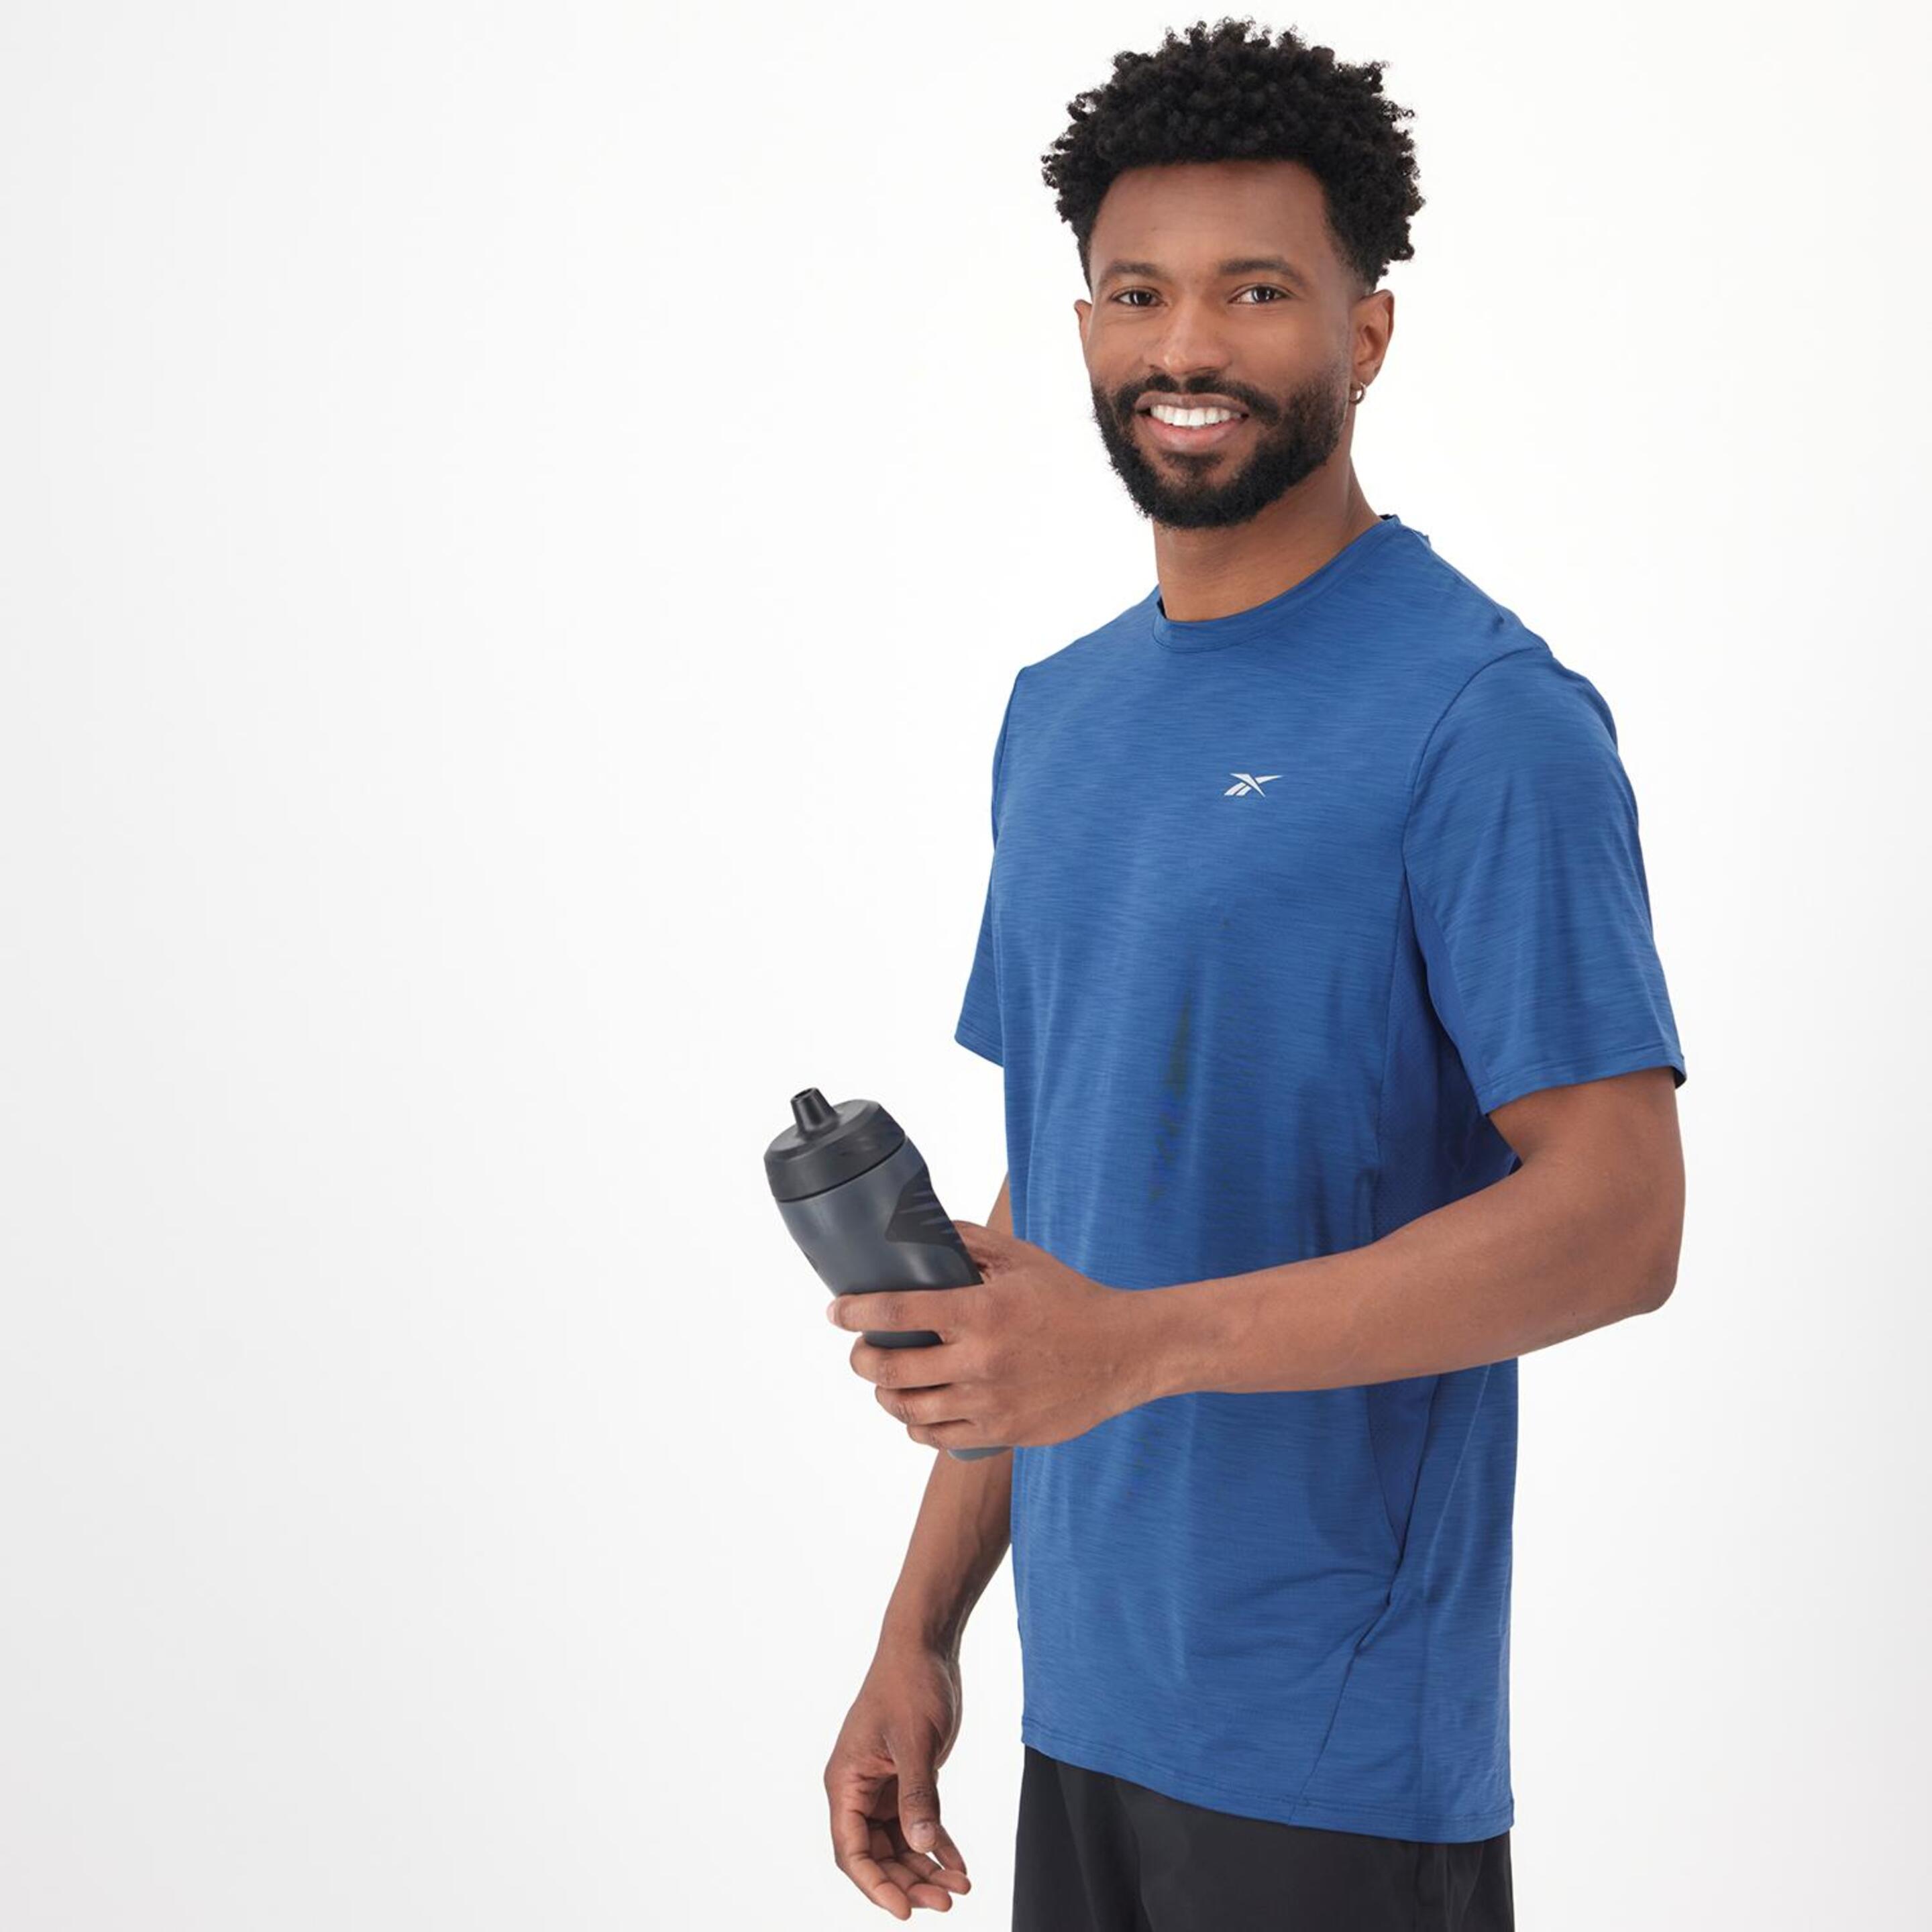 Reebok Athlete 2.0 Chill - Azul - Camiseta Running Hombre